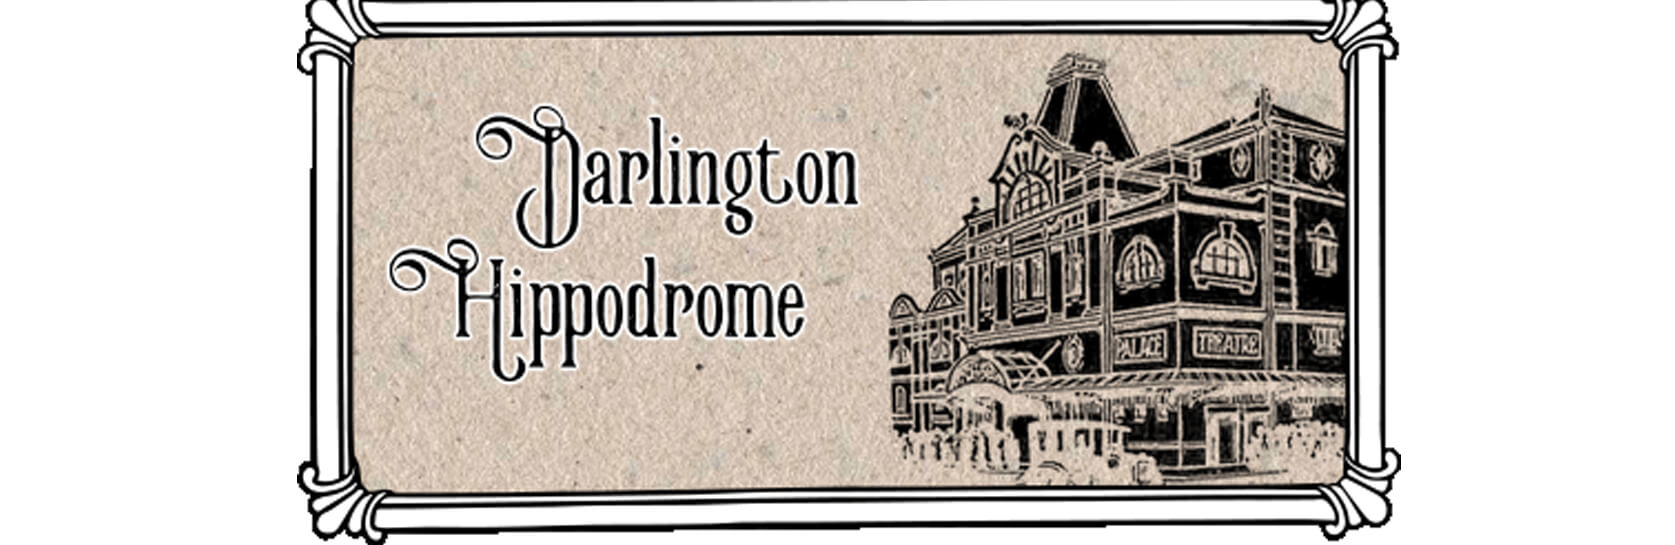 Darlington Hippodrome PowerPoint Slides - Topic 2 - Darlington Hippodrome